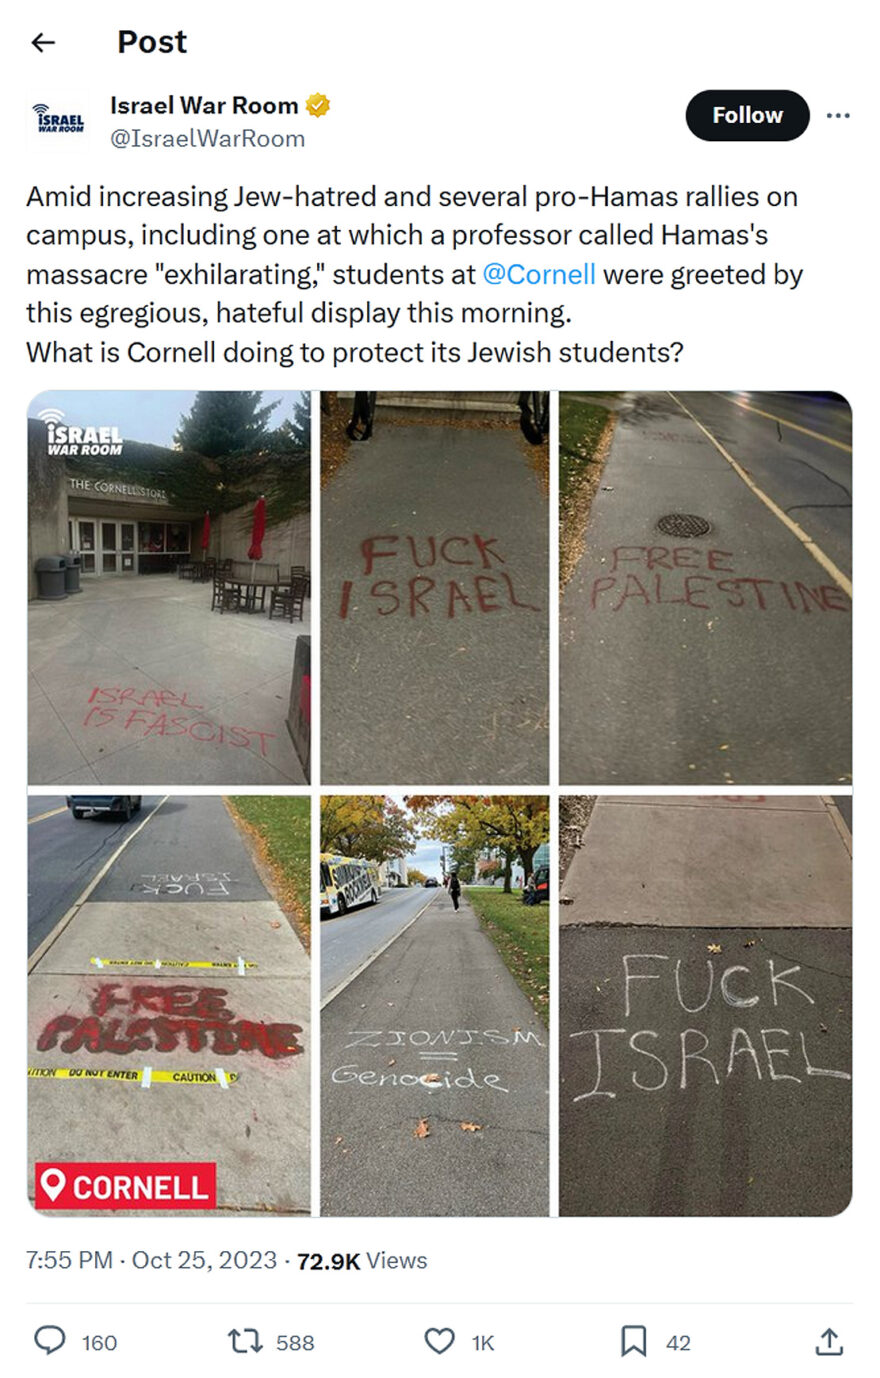 Israel War Room-tweet-25October2023-Amid increasing Jew-hatred and several pro-Hamas rallies on campus